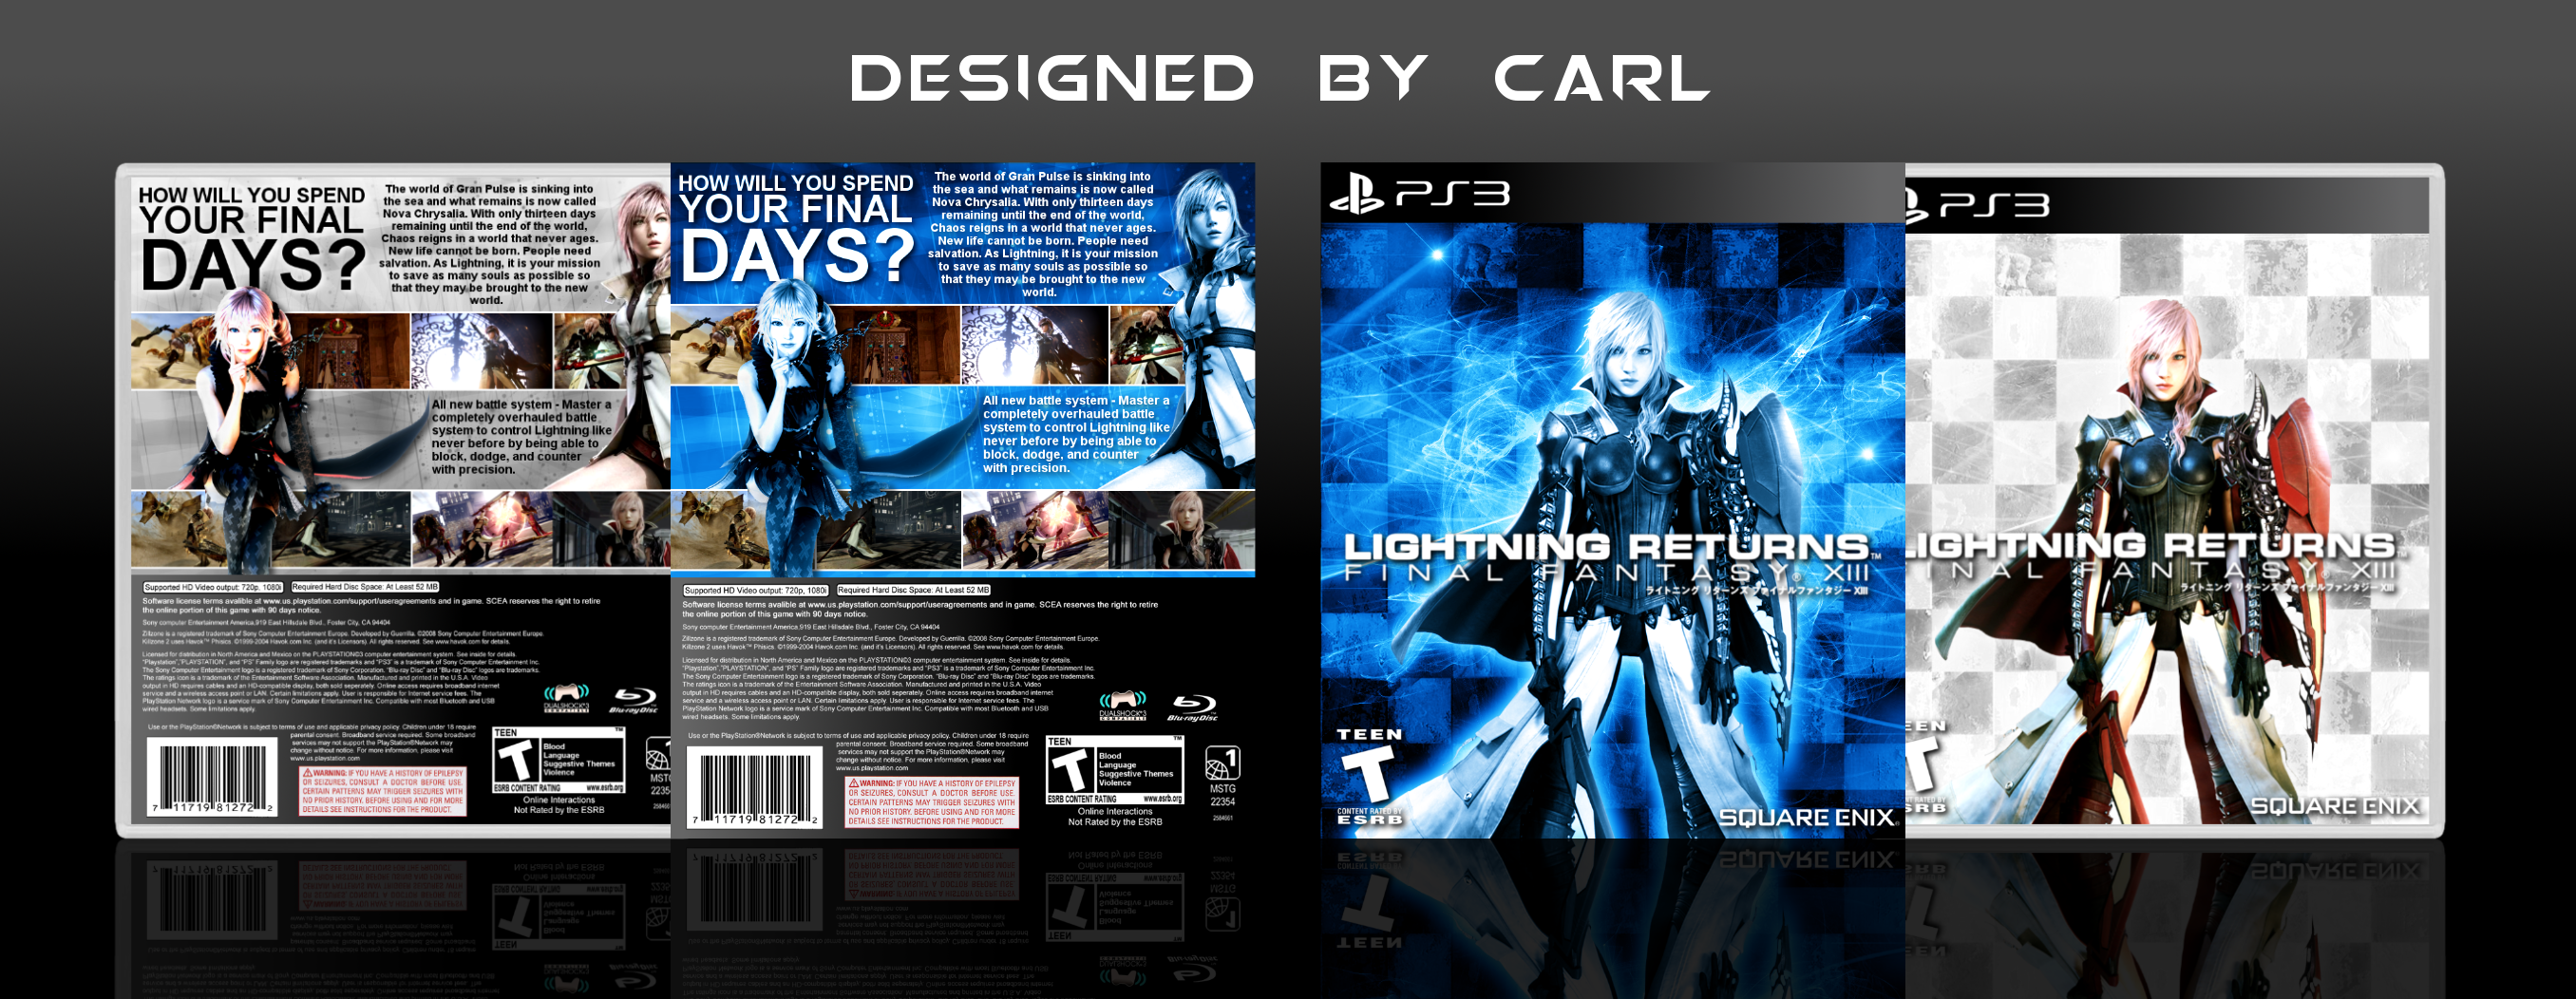 lightning returns final fantasy xiii metacritic download free